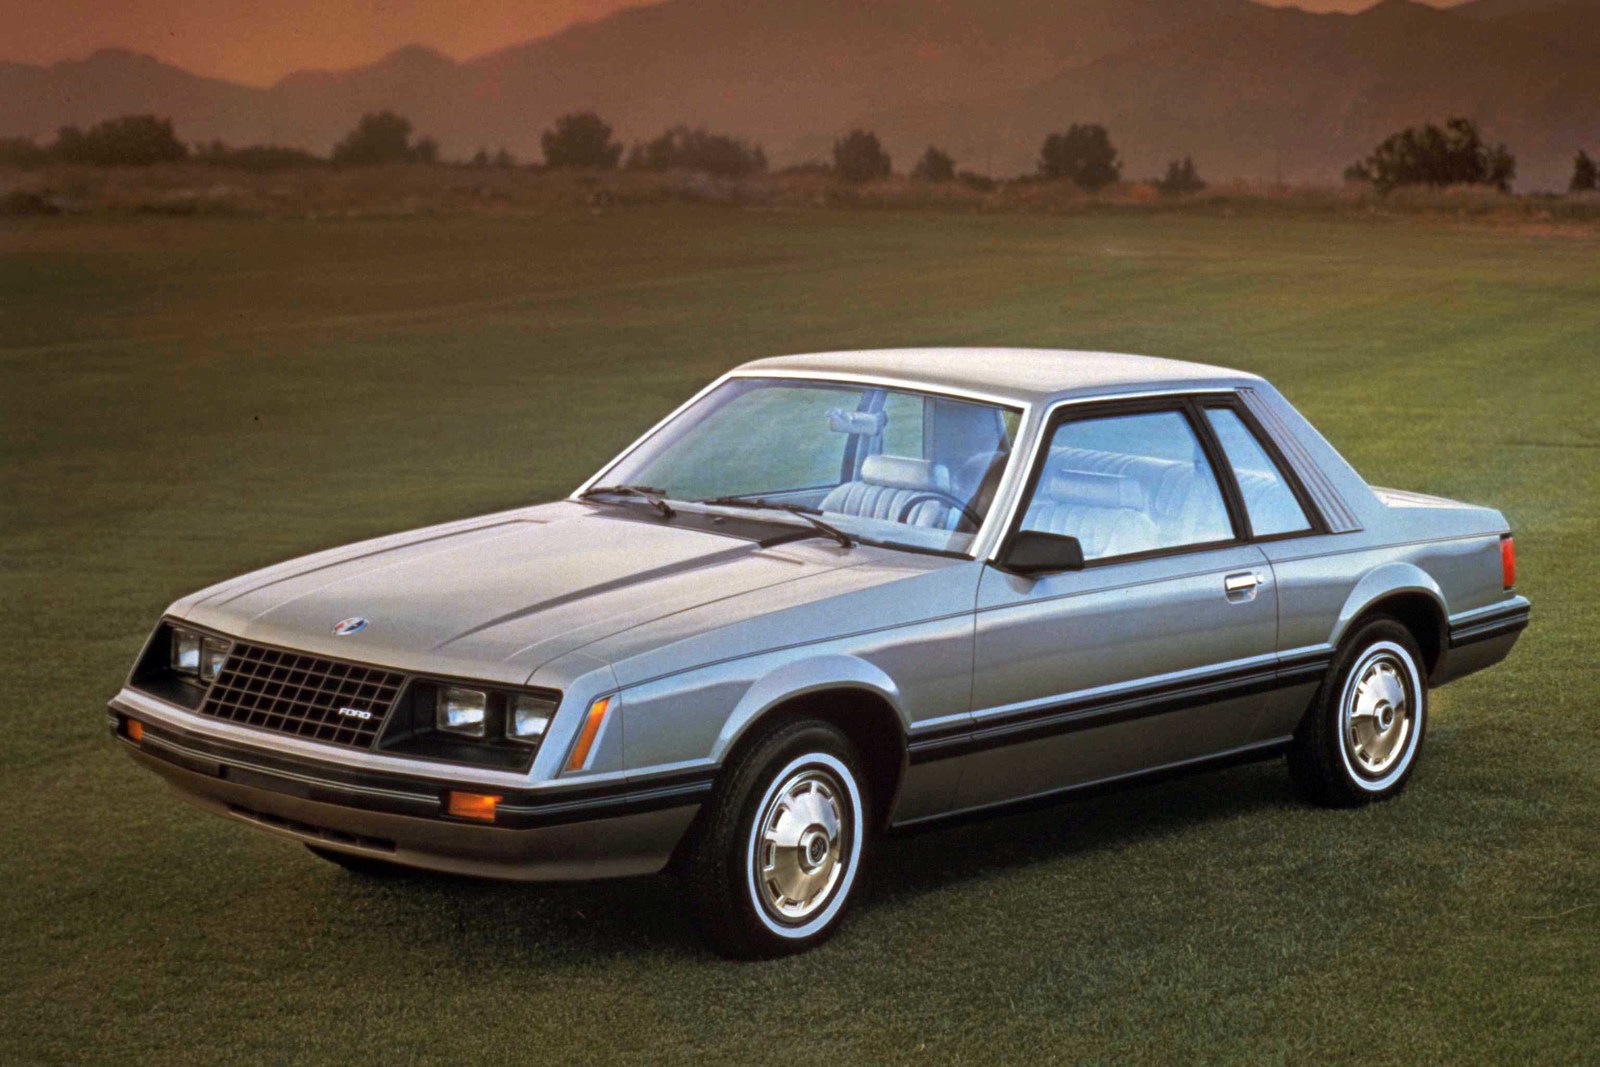 S650 Mustang 2021 MUSTANG (S650) - 7th Generation Mustang Confirmed 1979-Ford-Mustang-Tercera-Generaci%C3%B3n